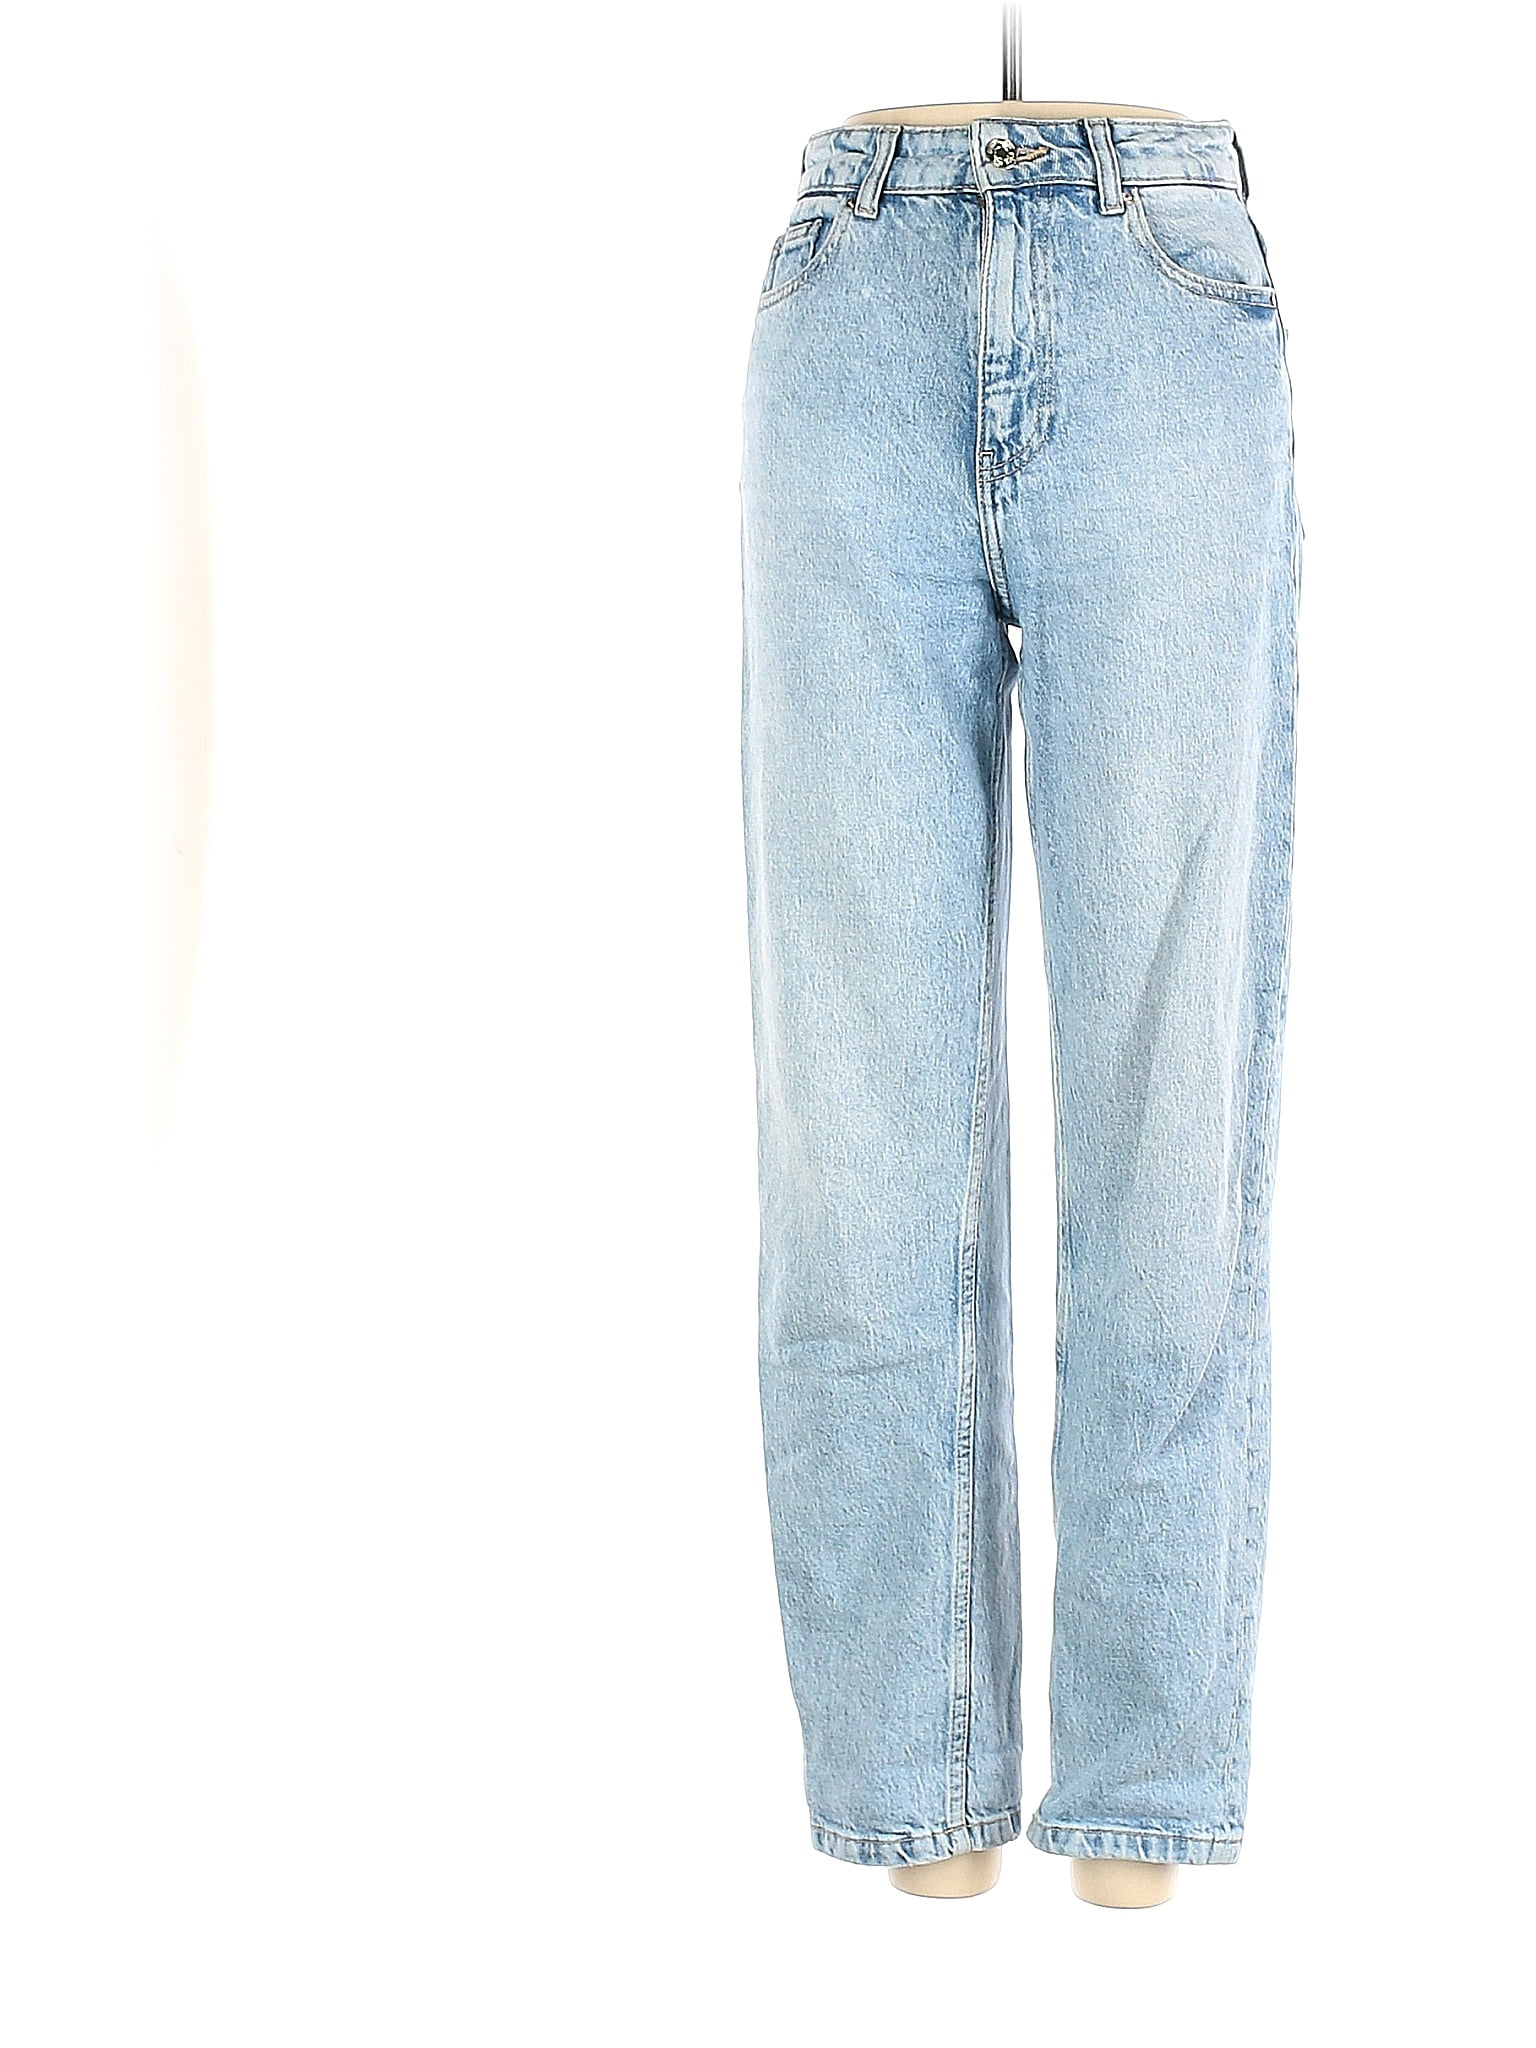 Zara Snake Print Brown Jeans Size 4 - 46% off